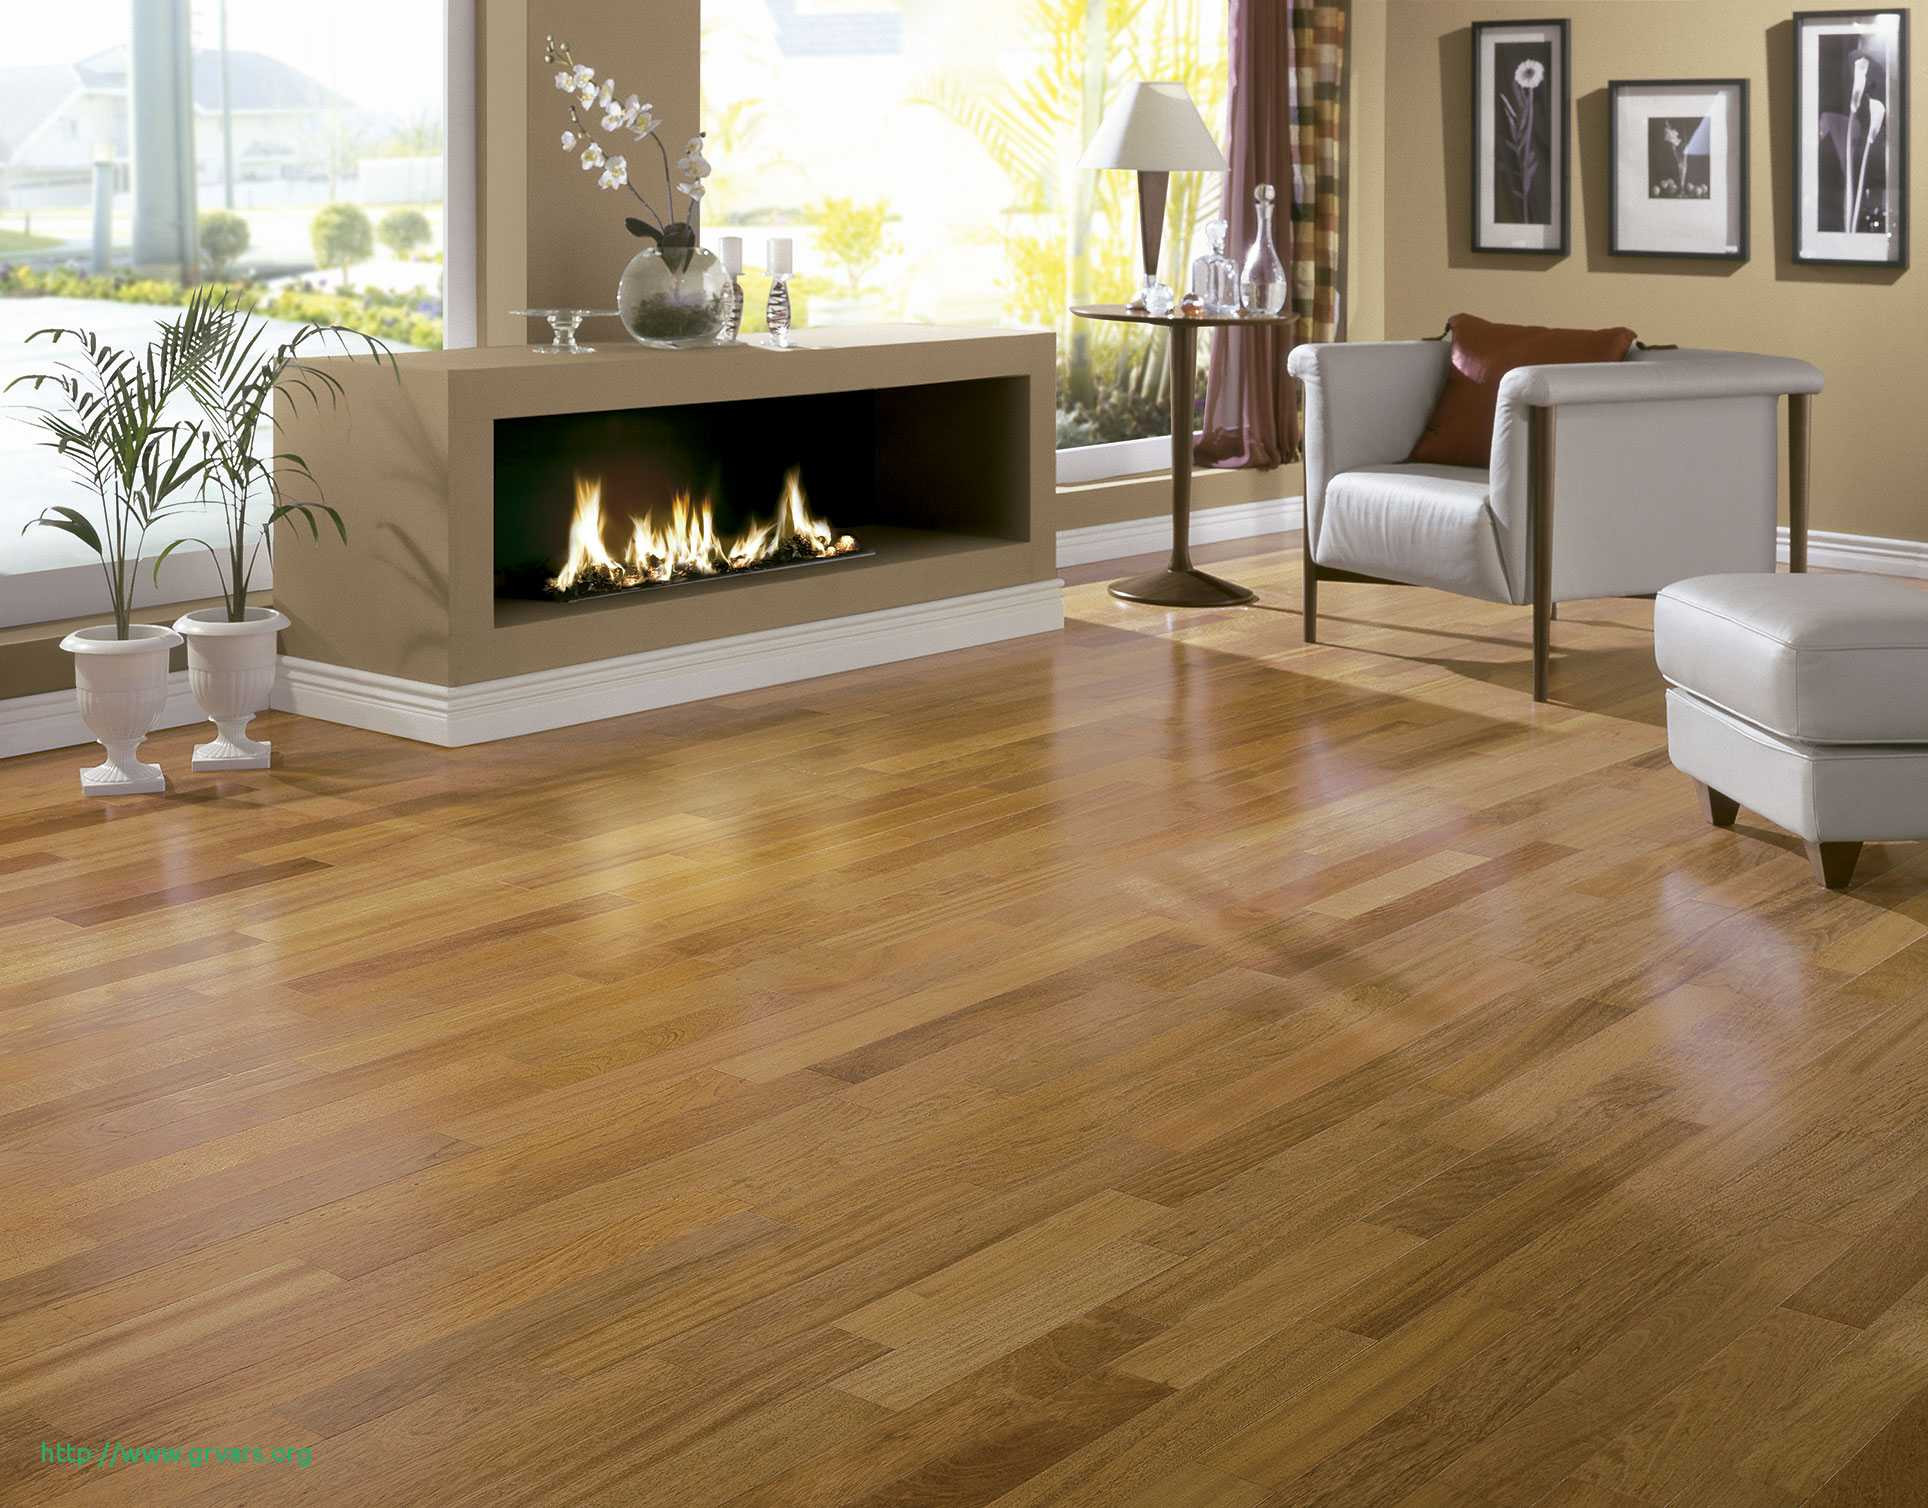 Wilshire Fireplace Unique 27 attractive Cost to Refinish Hardwood Floors San Francisco